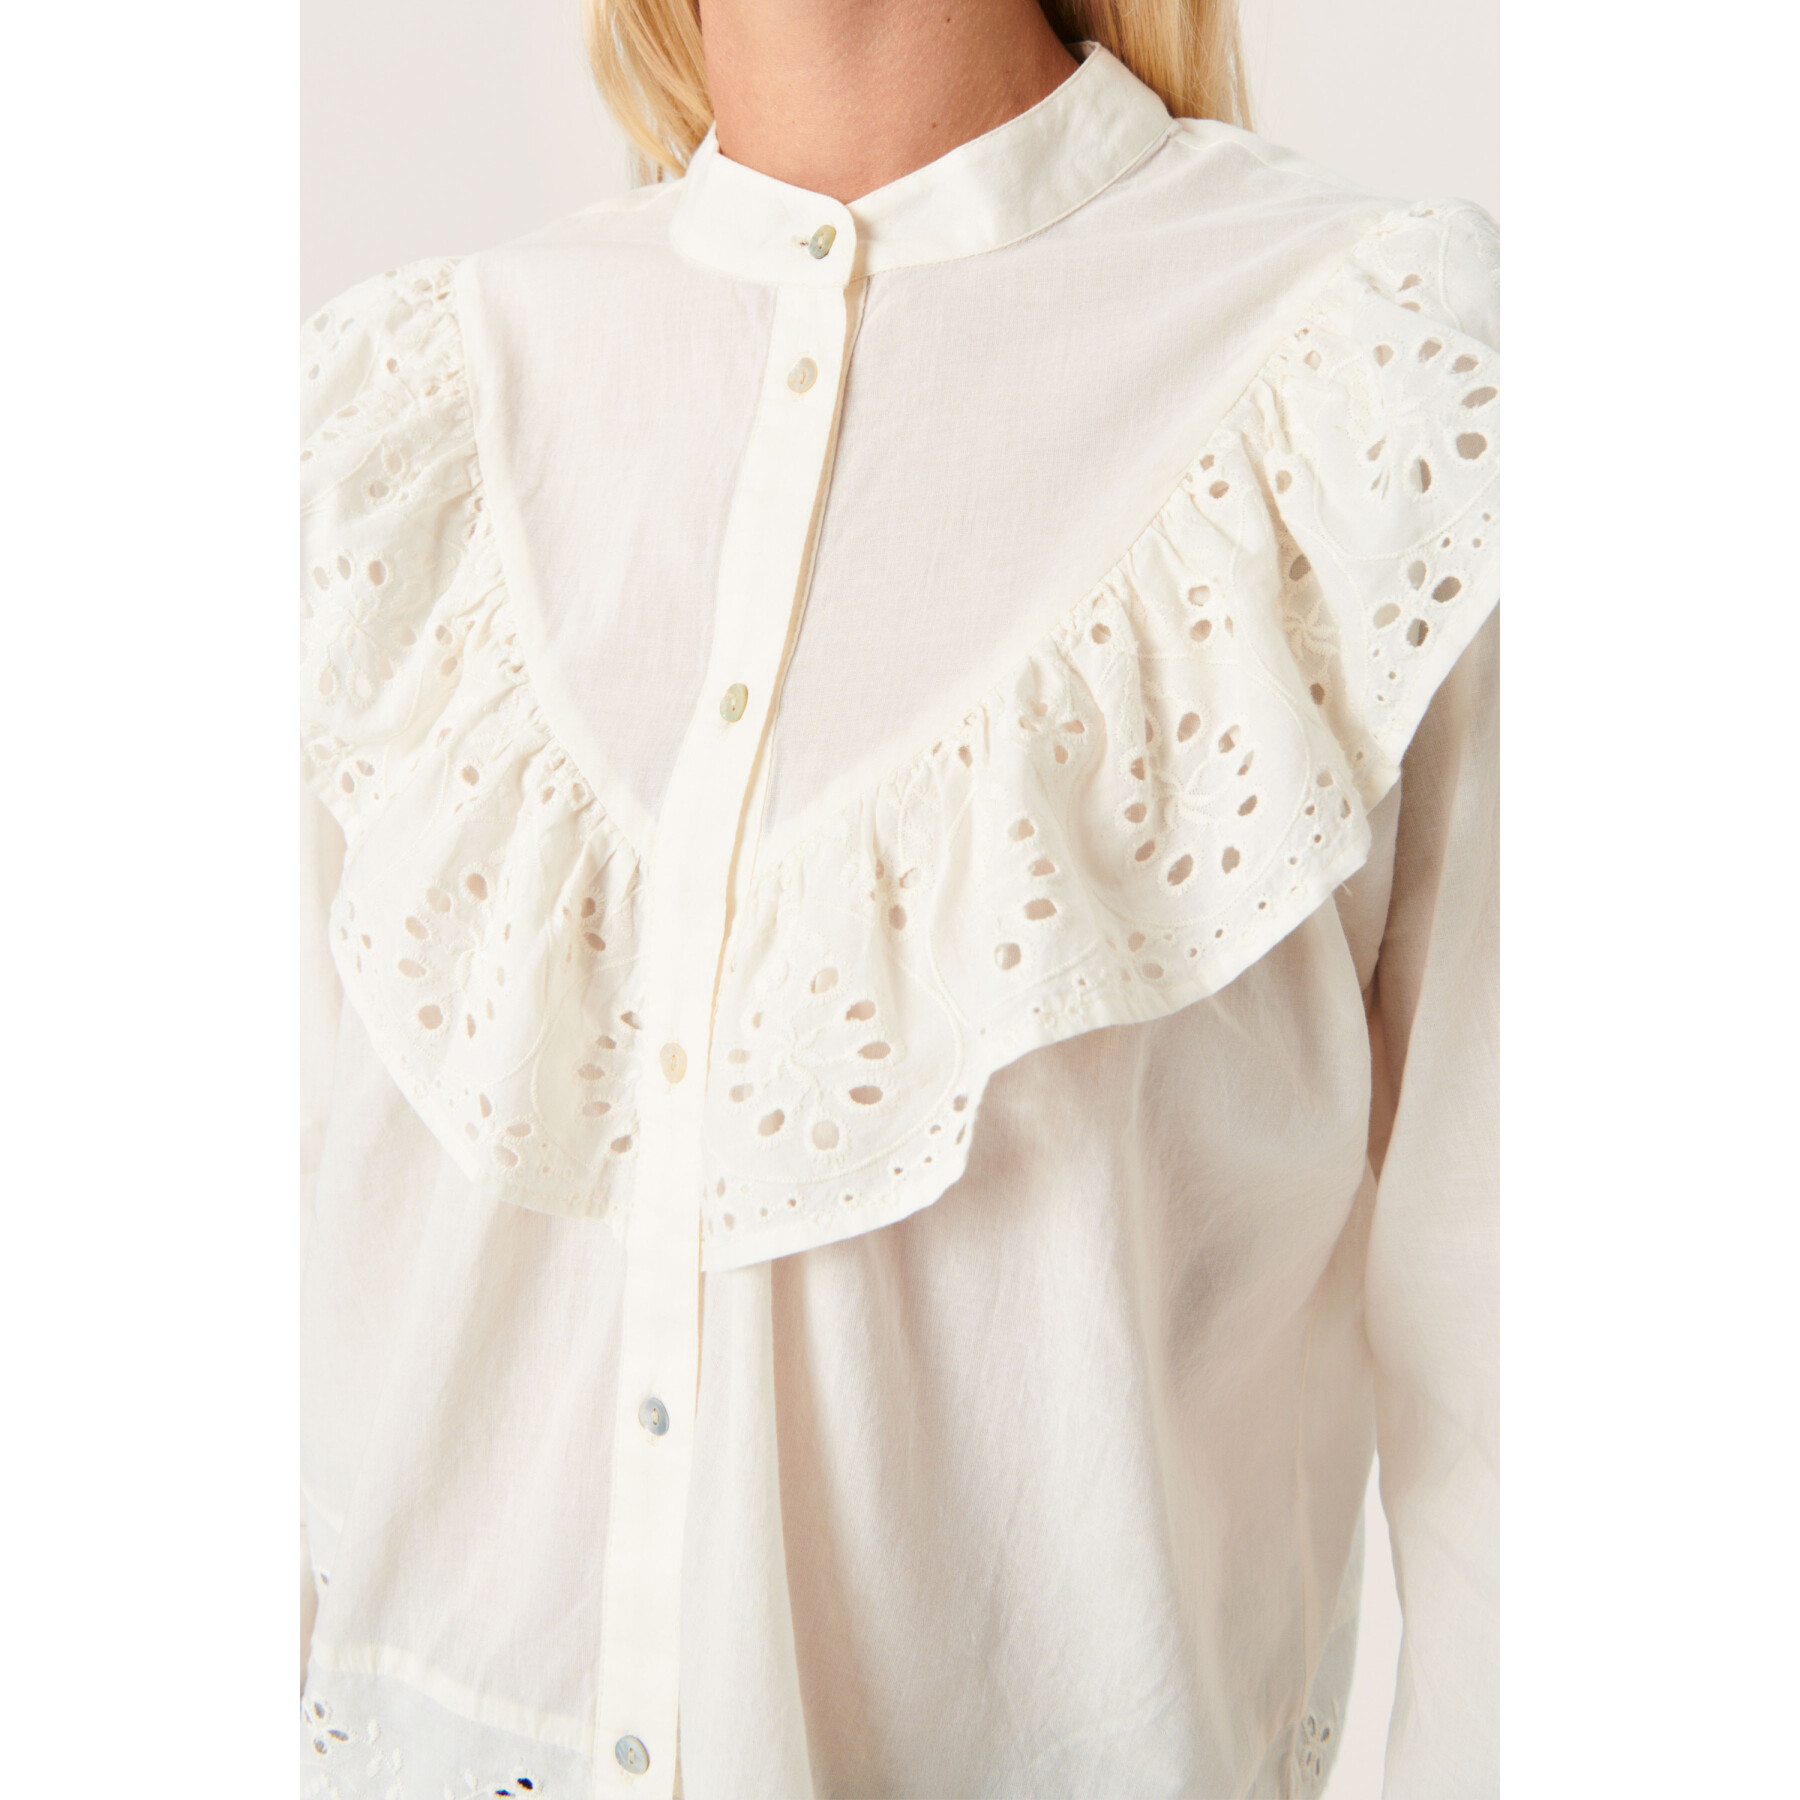 Long sleeve blouse for women Soaked in Luxury Irim